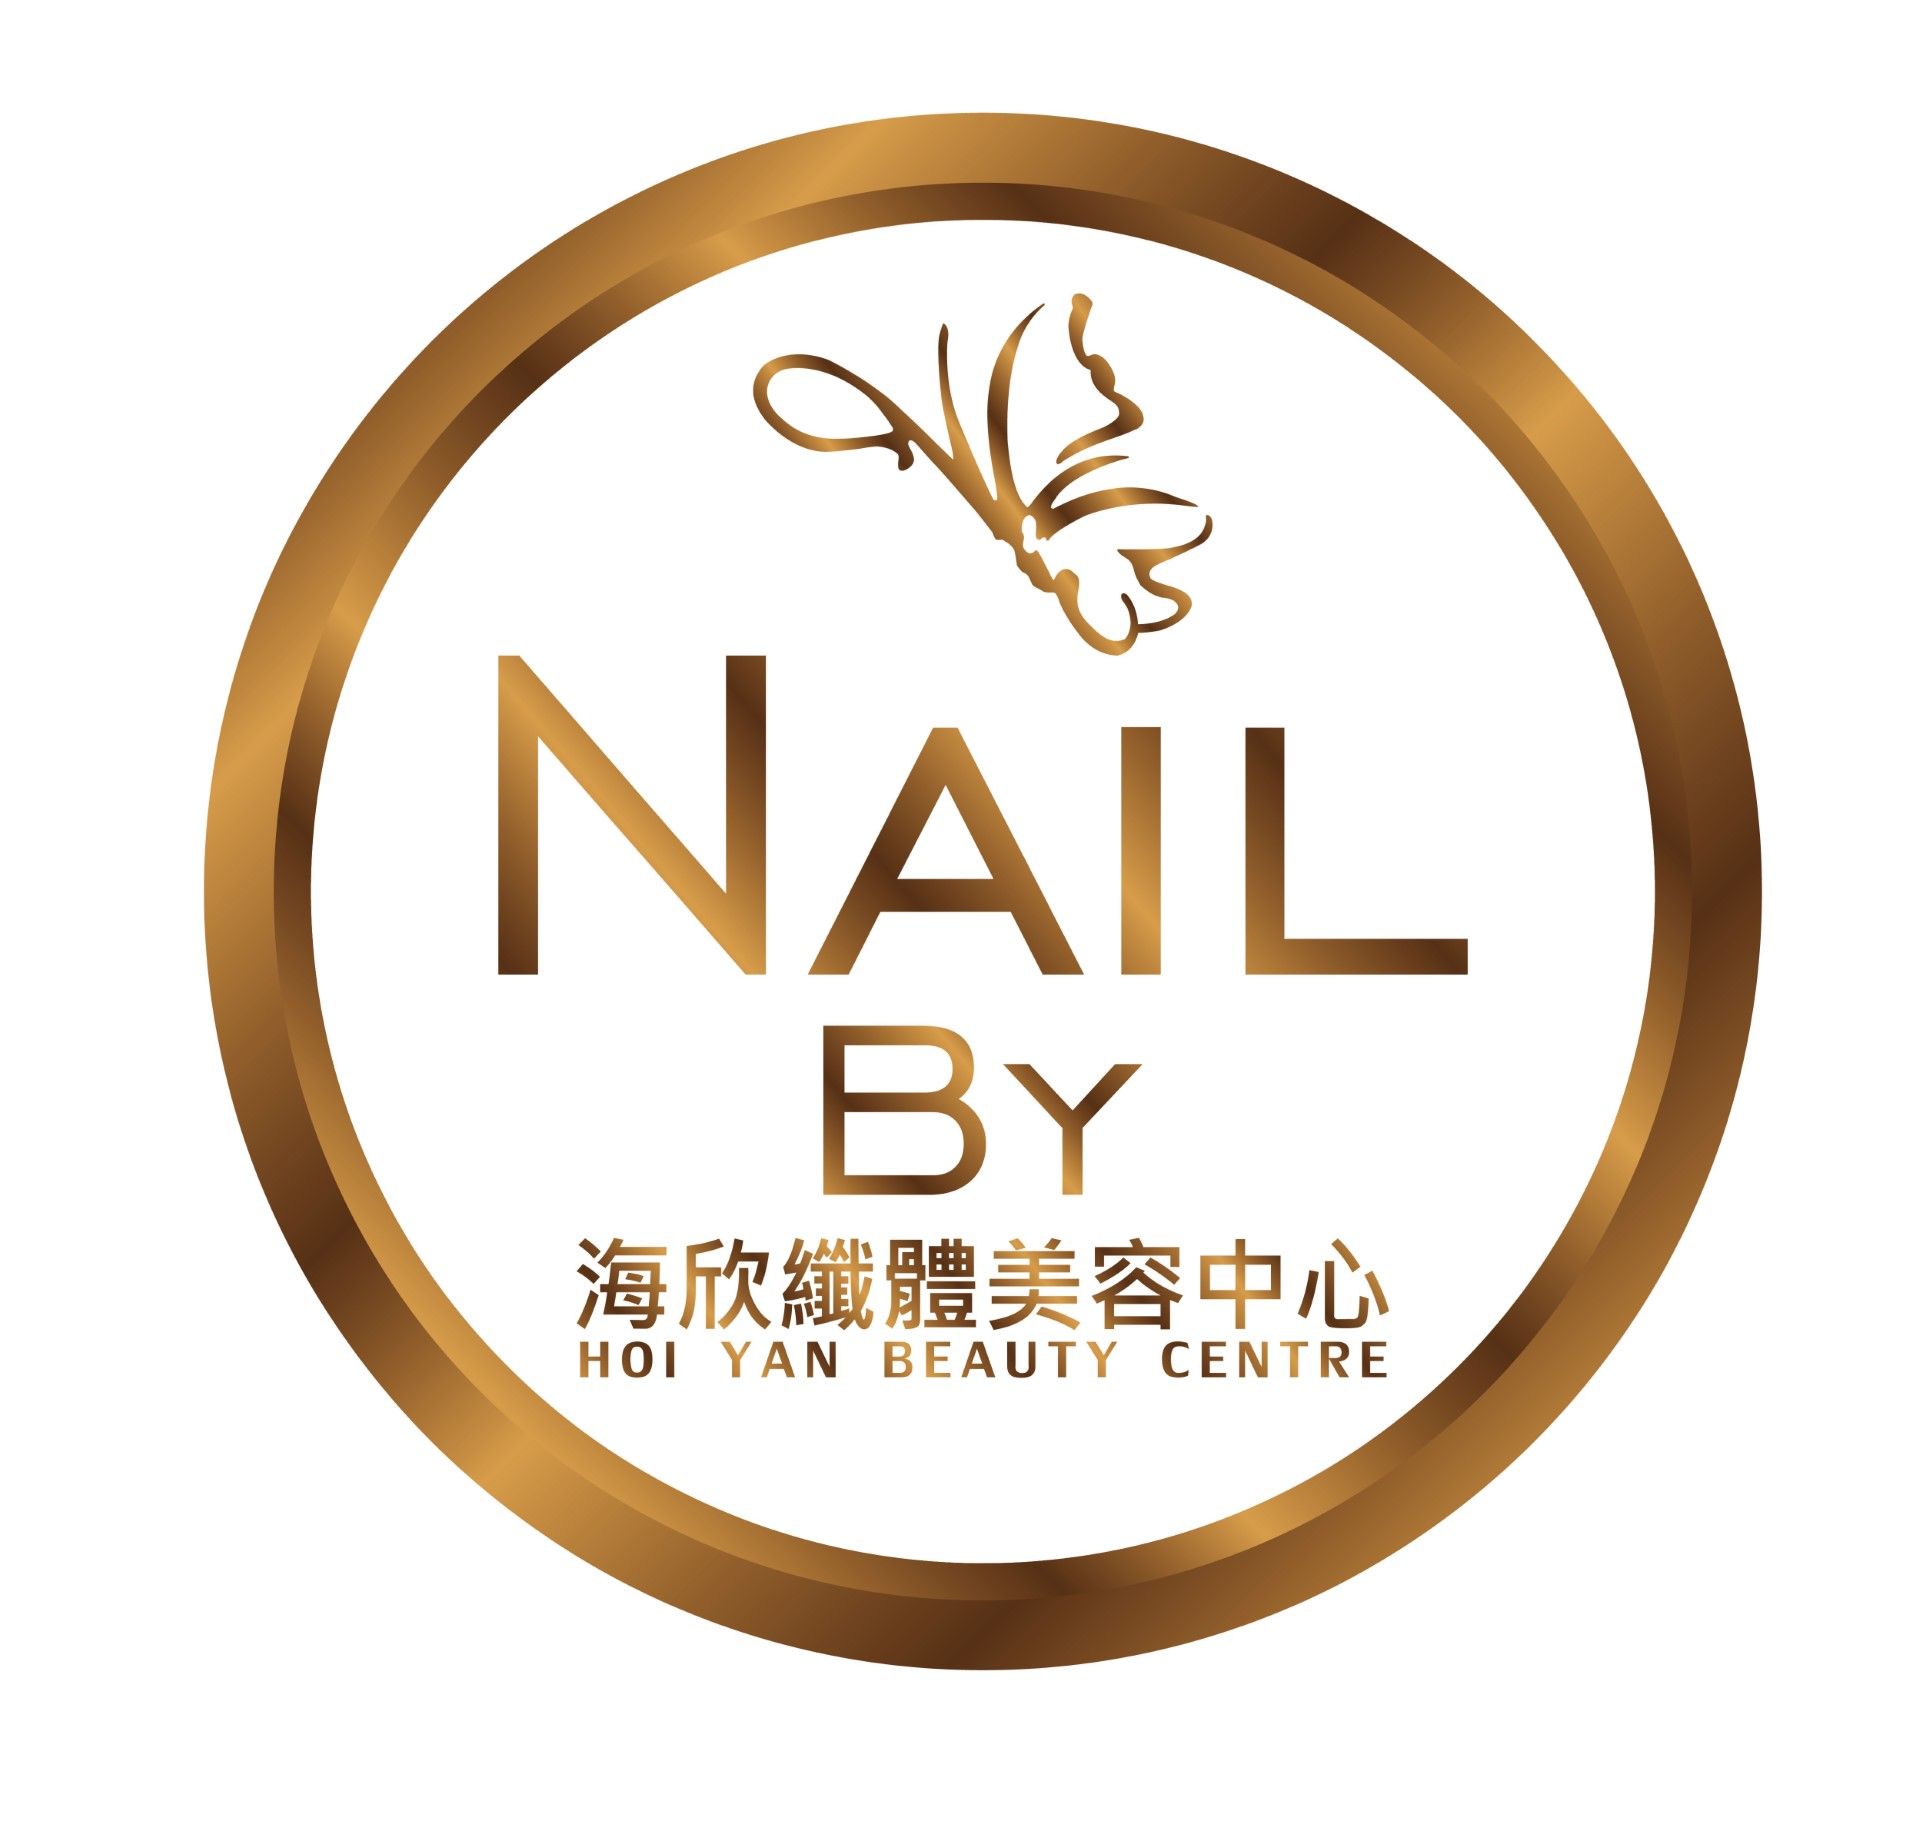 Nail by 海欣纖體美容中心 logo